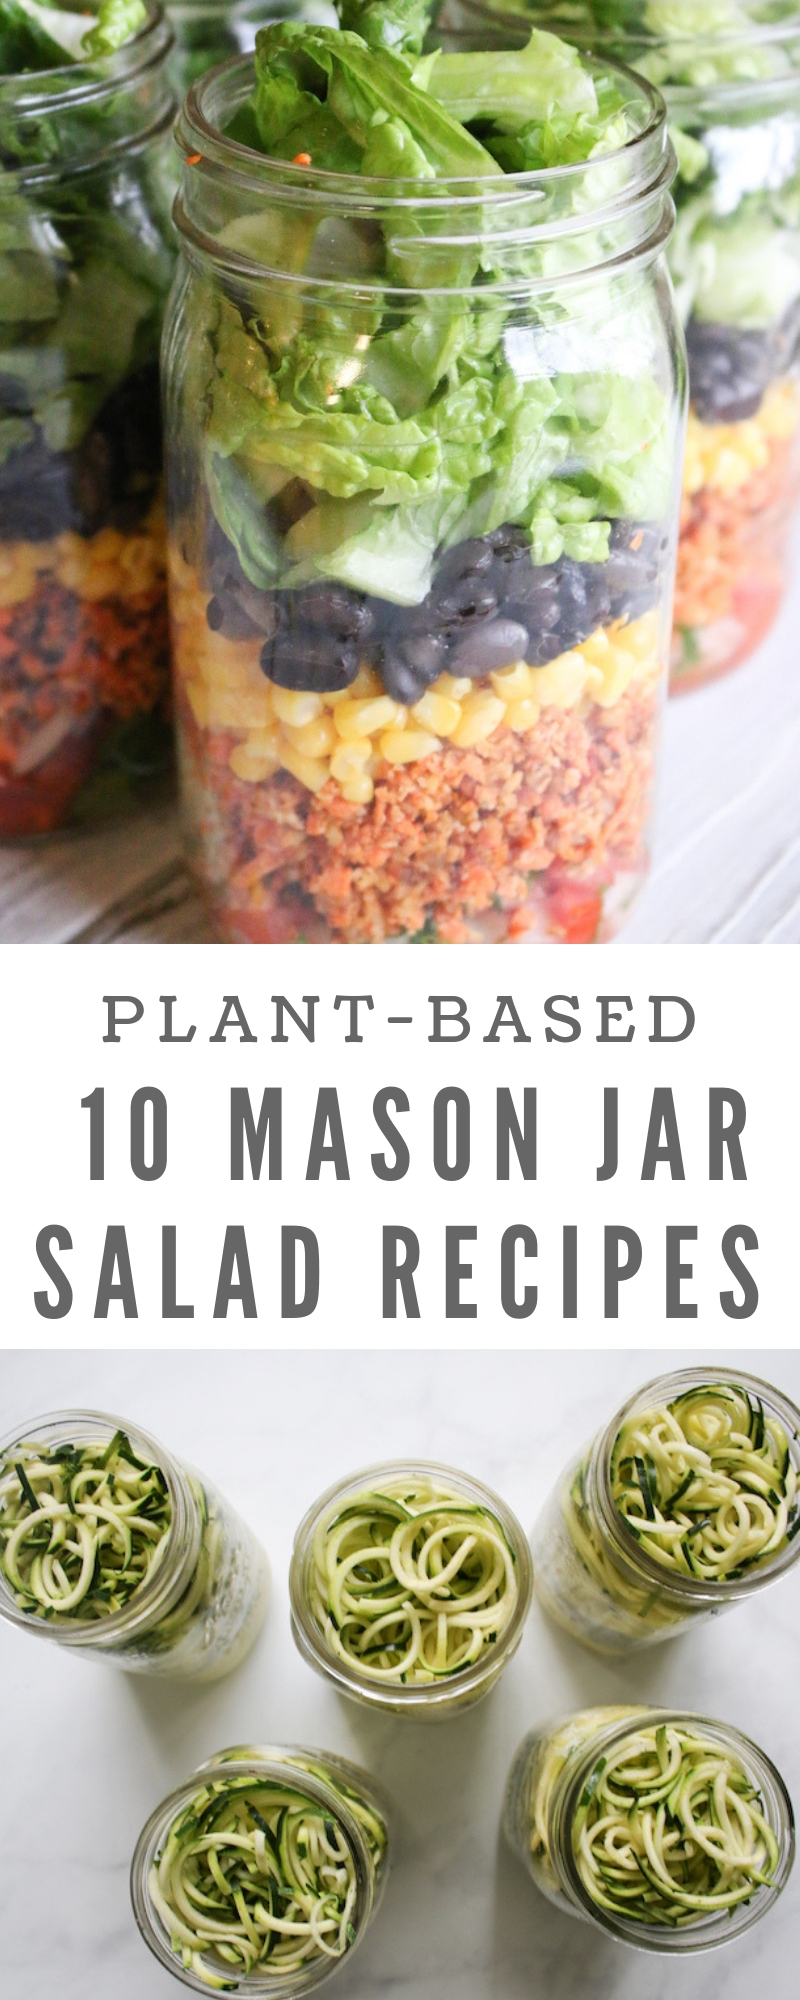 Top 10 Plant-Based Mason Jar Salad Recipes